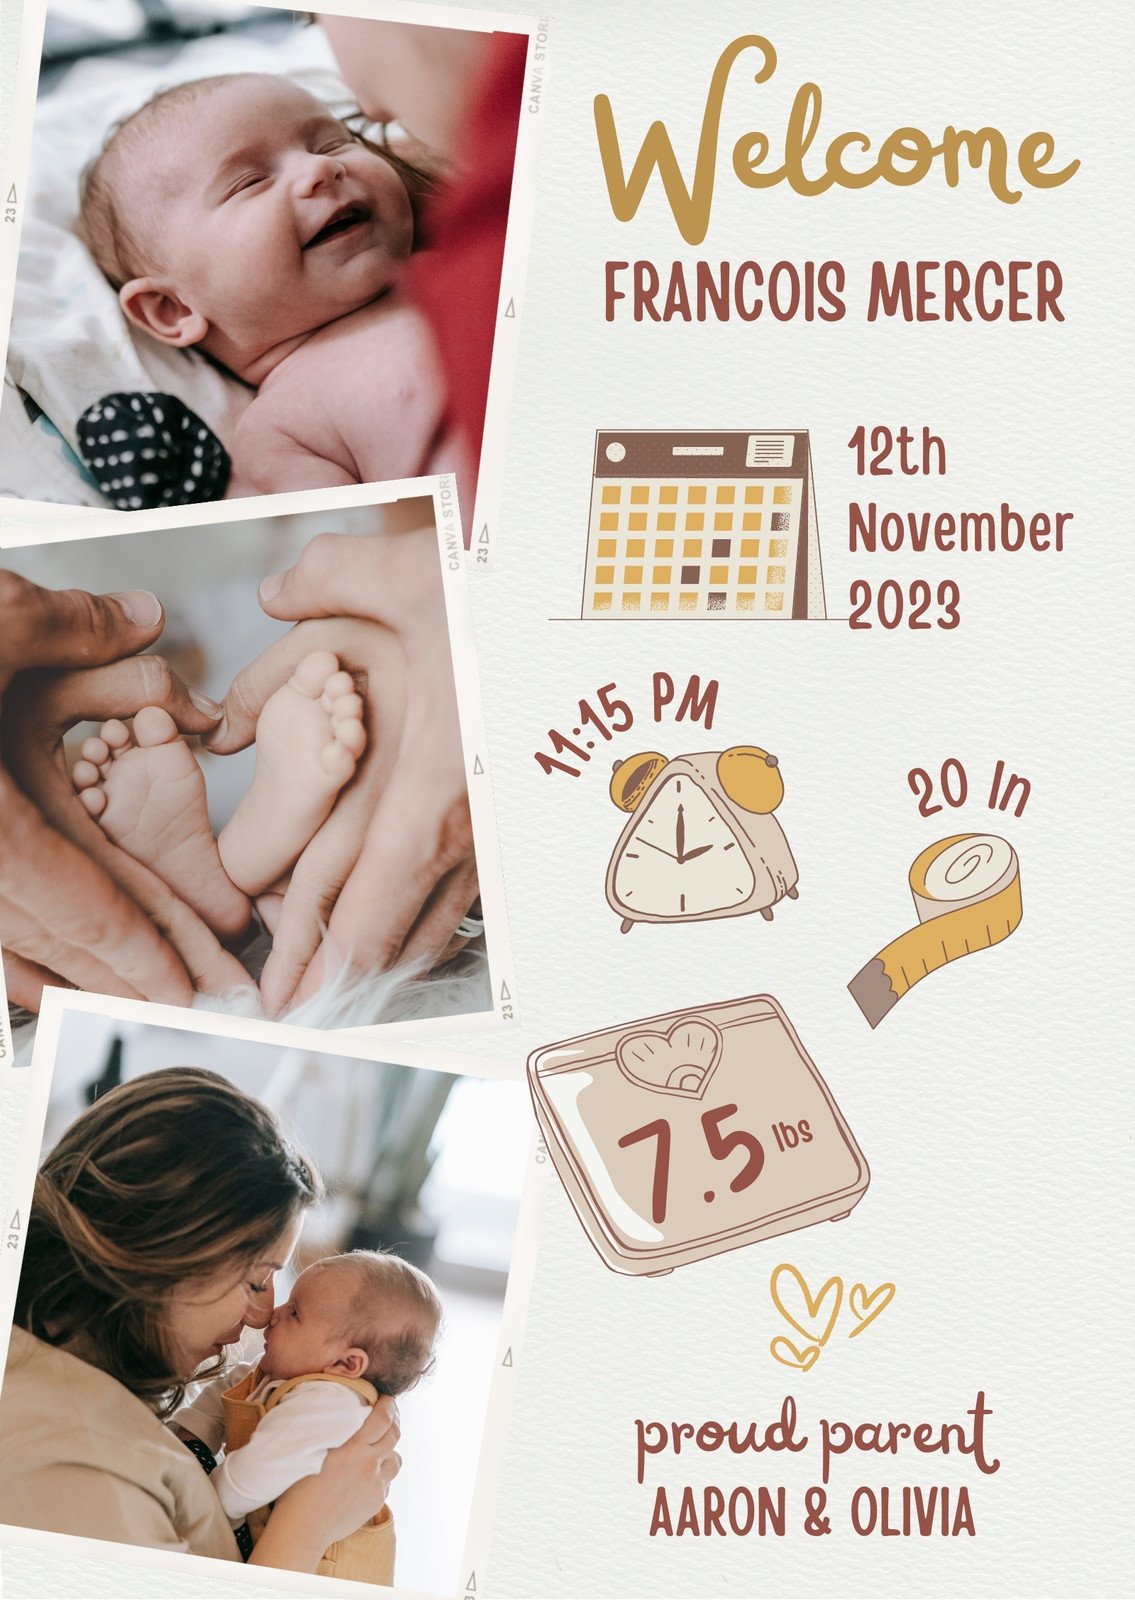 Newborn Baby Boy Stickers Set Stock Illustration - Download Image